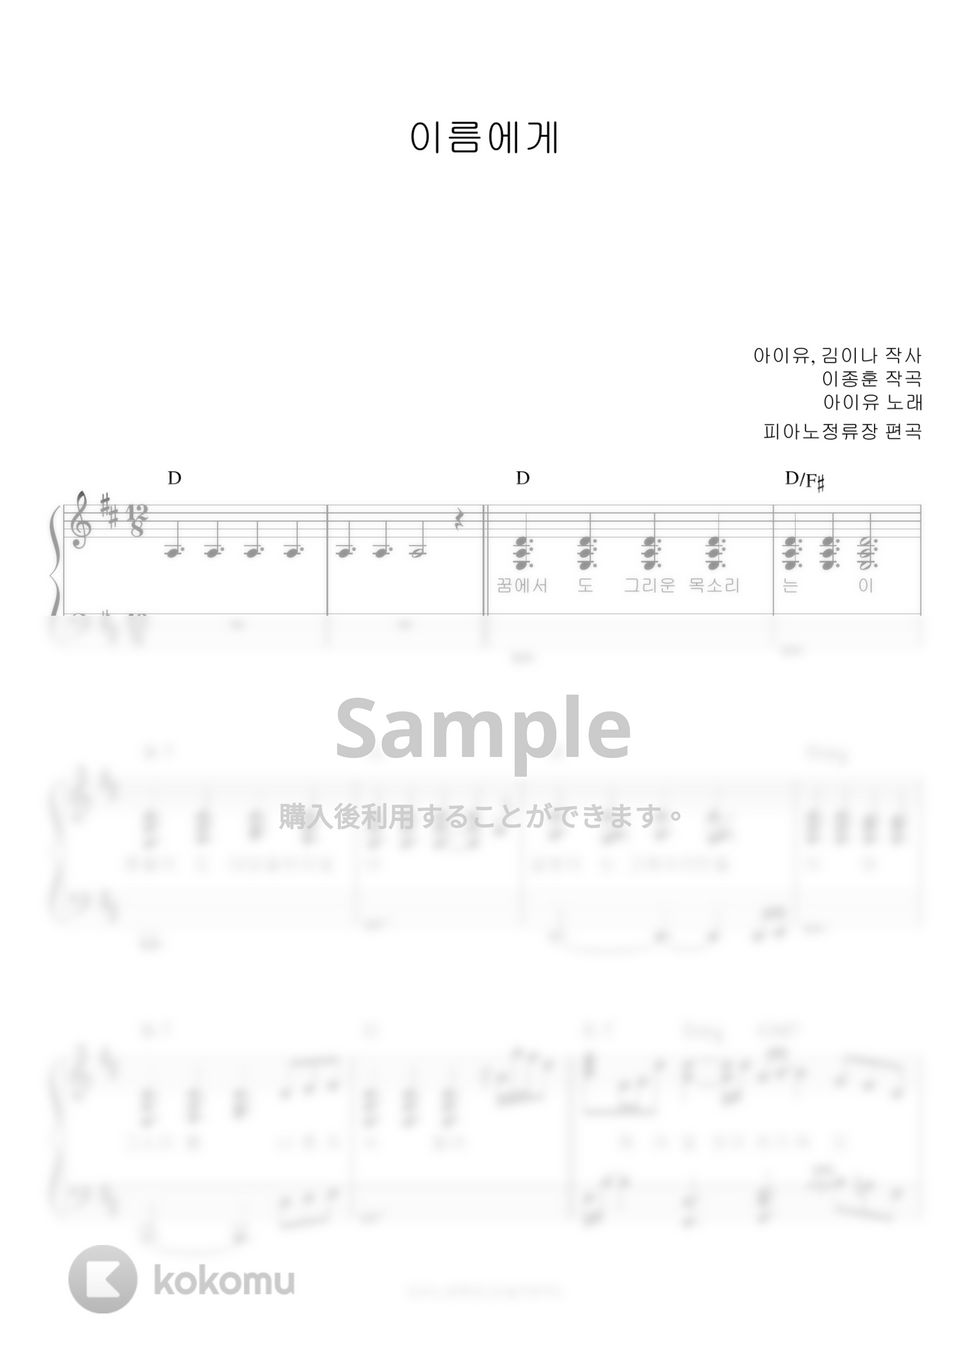 IU - 名前へ (伴奏楽譜) by pianojeongryujang